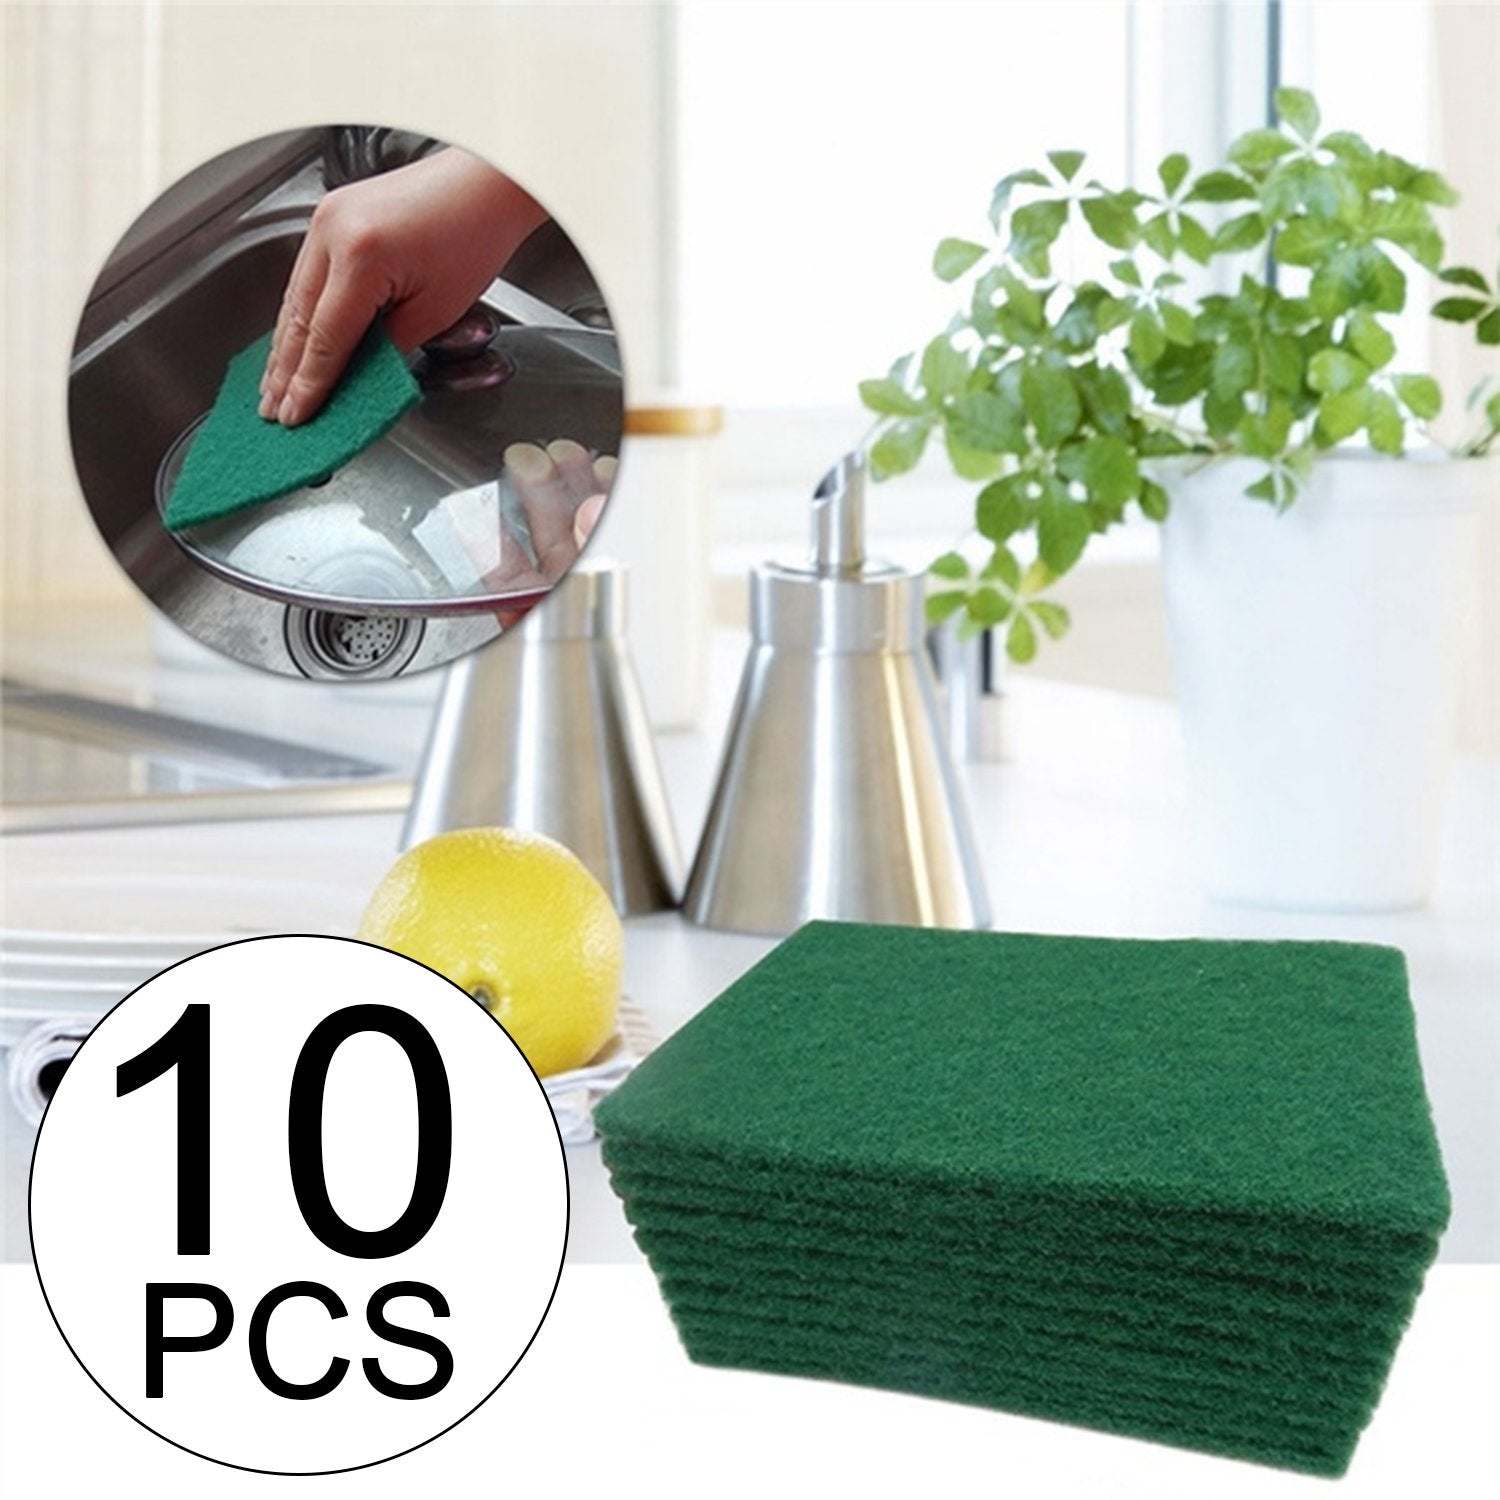 1495 Green Kitchen Scrubber Pads for Utensils/Tiles Cleaning - SkyShoppy